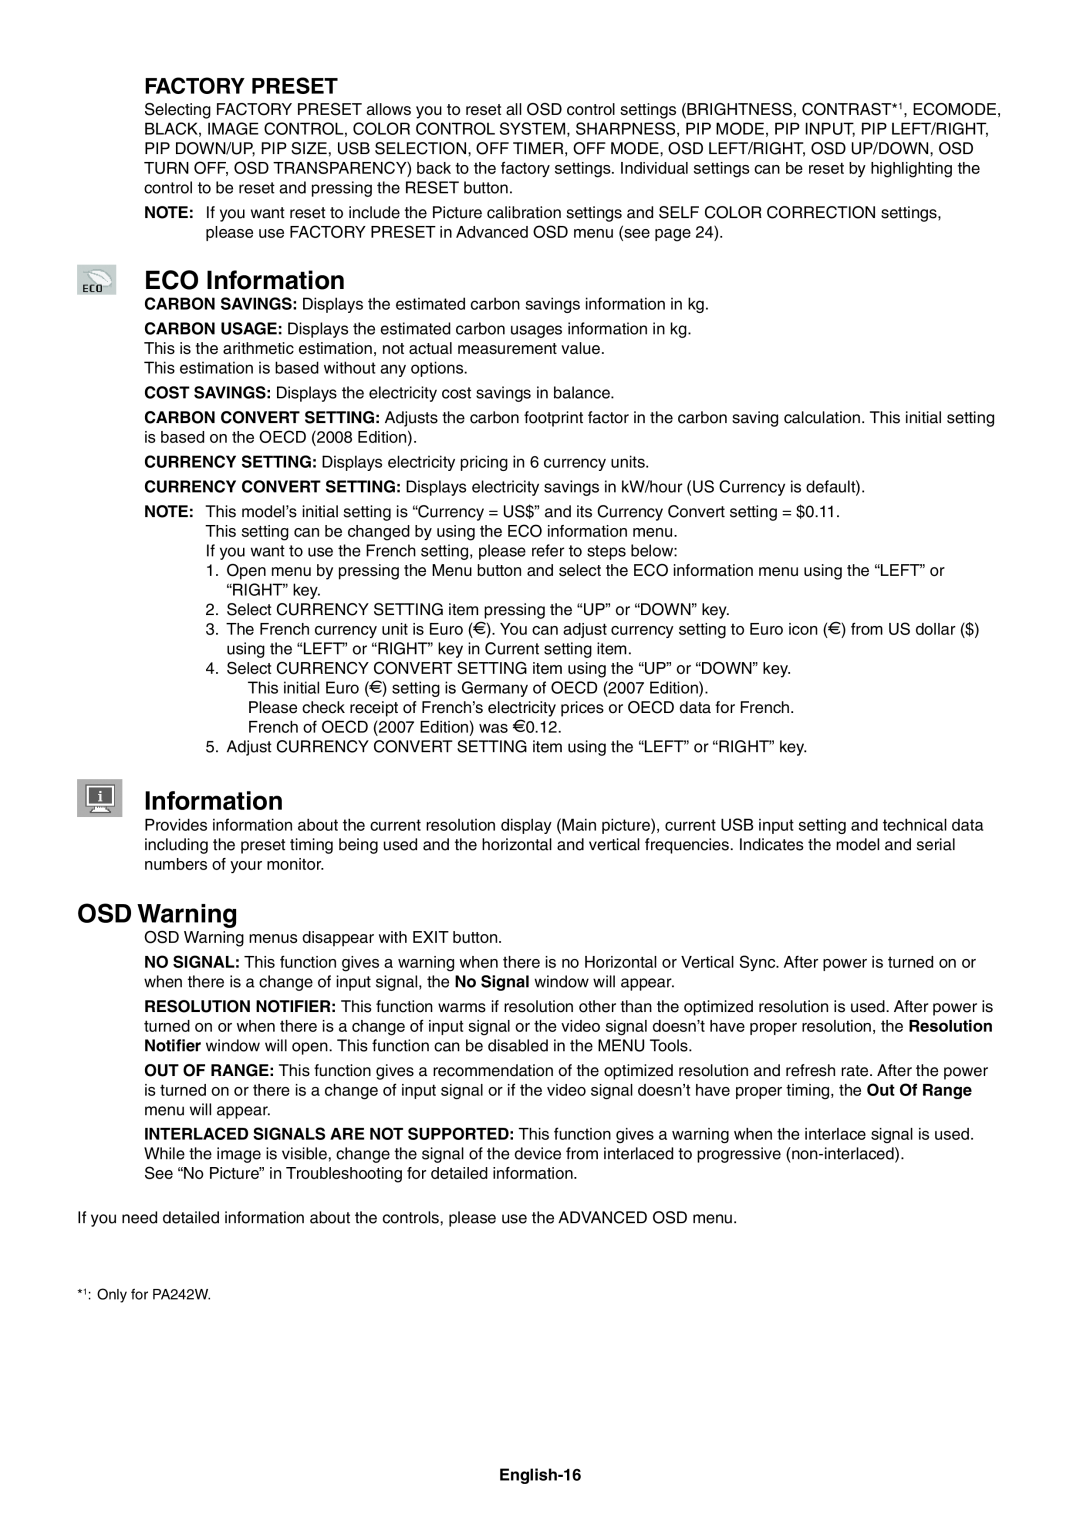 NEC PA242W user manual ECO Information, OSD Warning, Factory Preset, English-16 